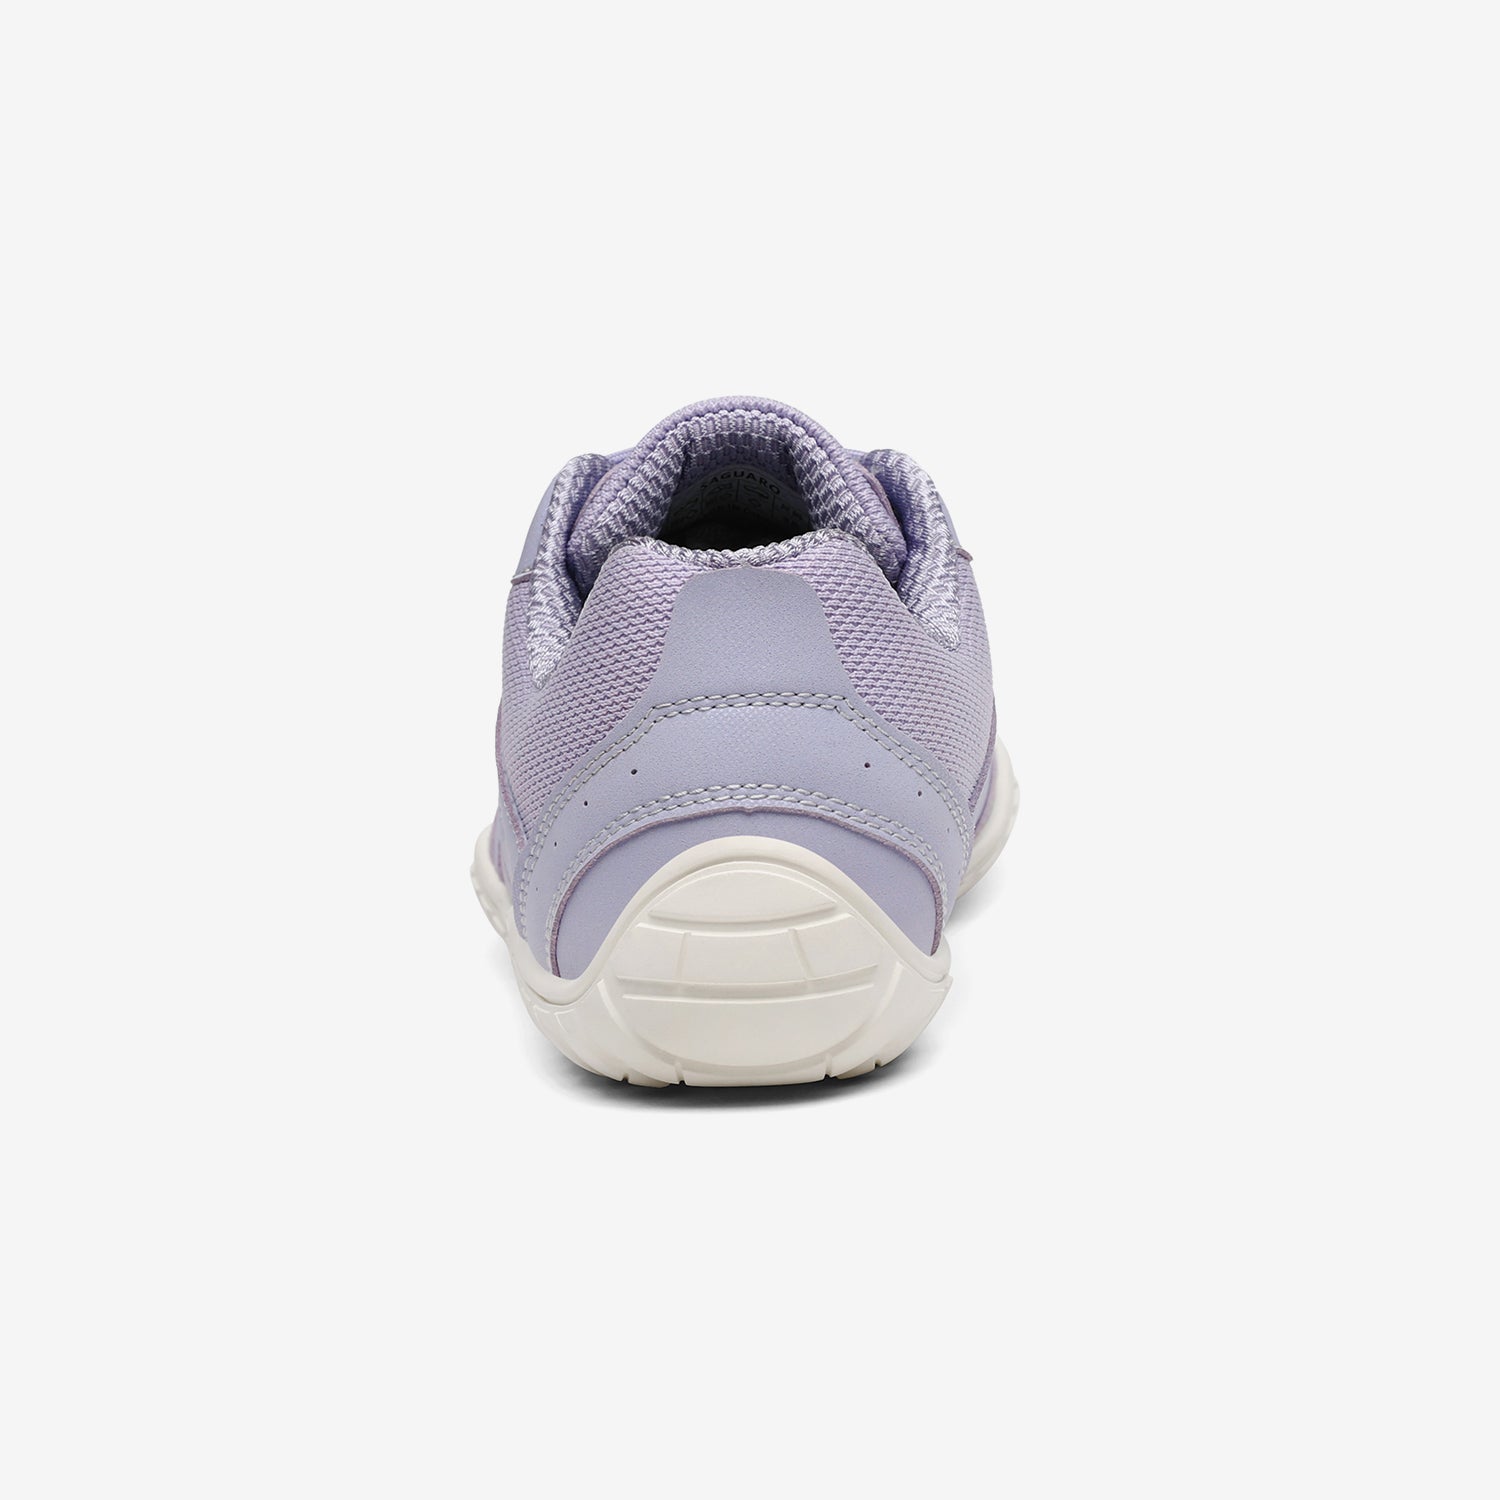 Wish IV - Barefoot Shoes